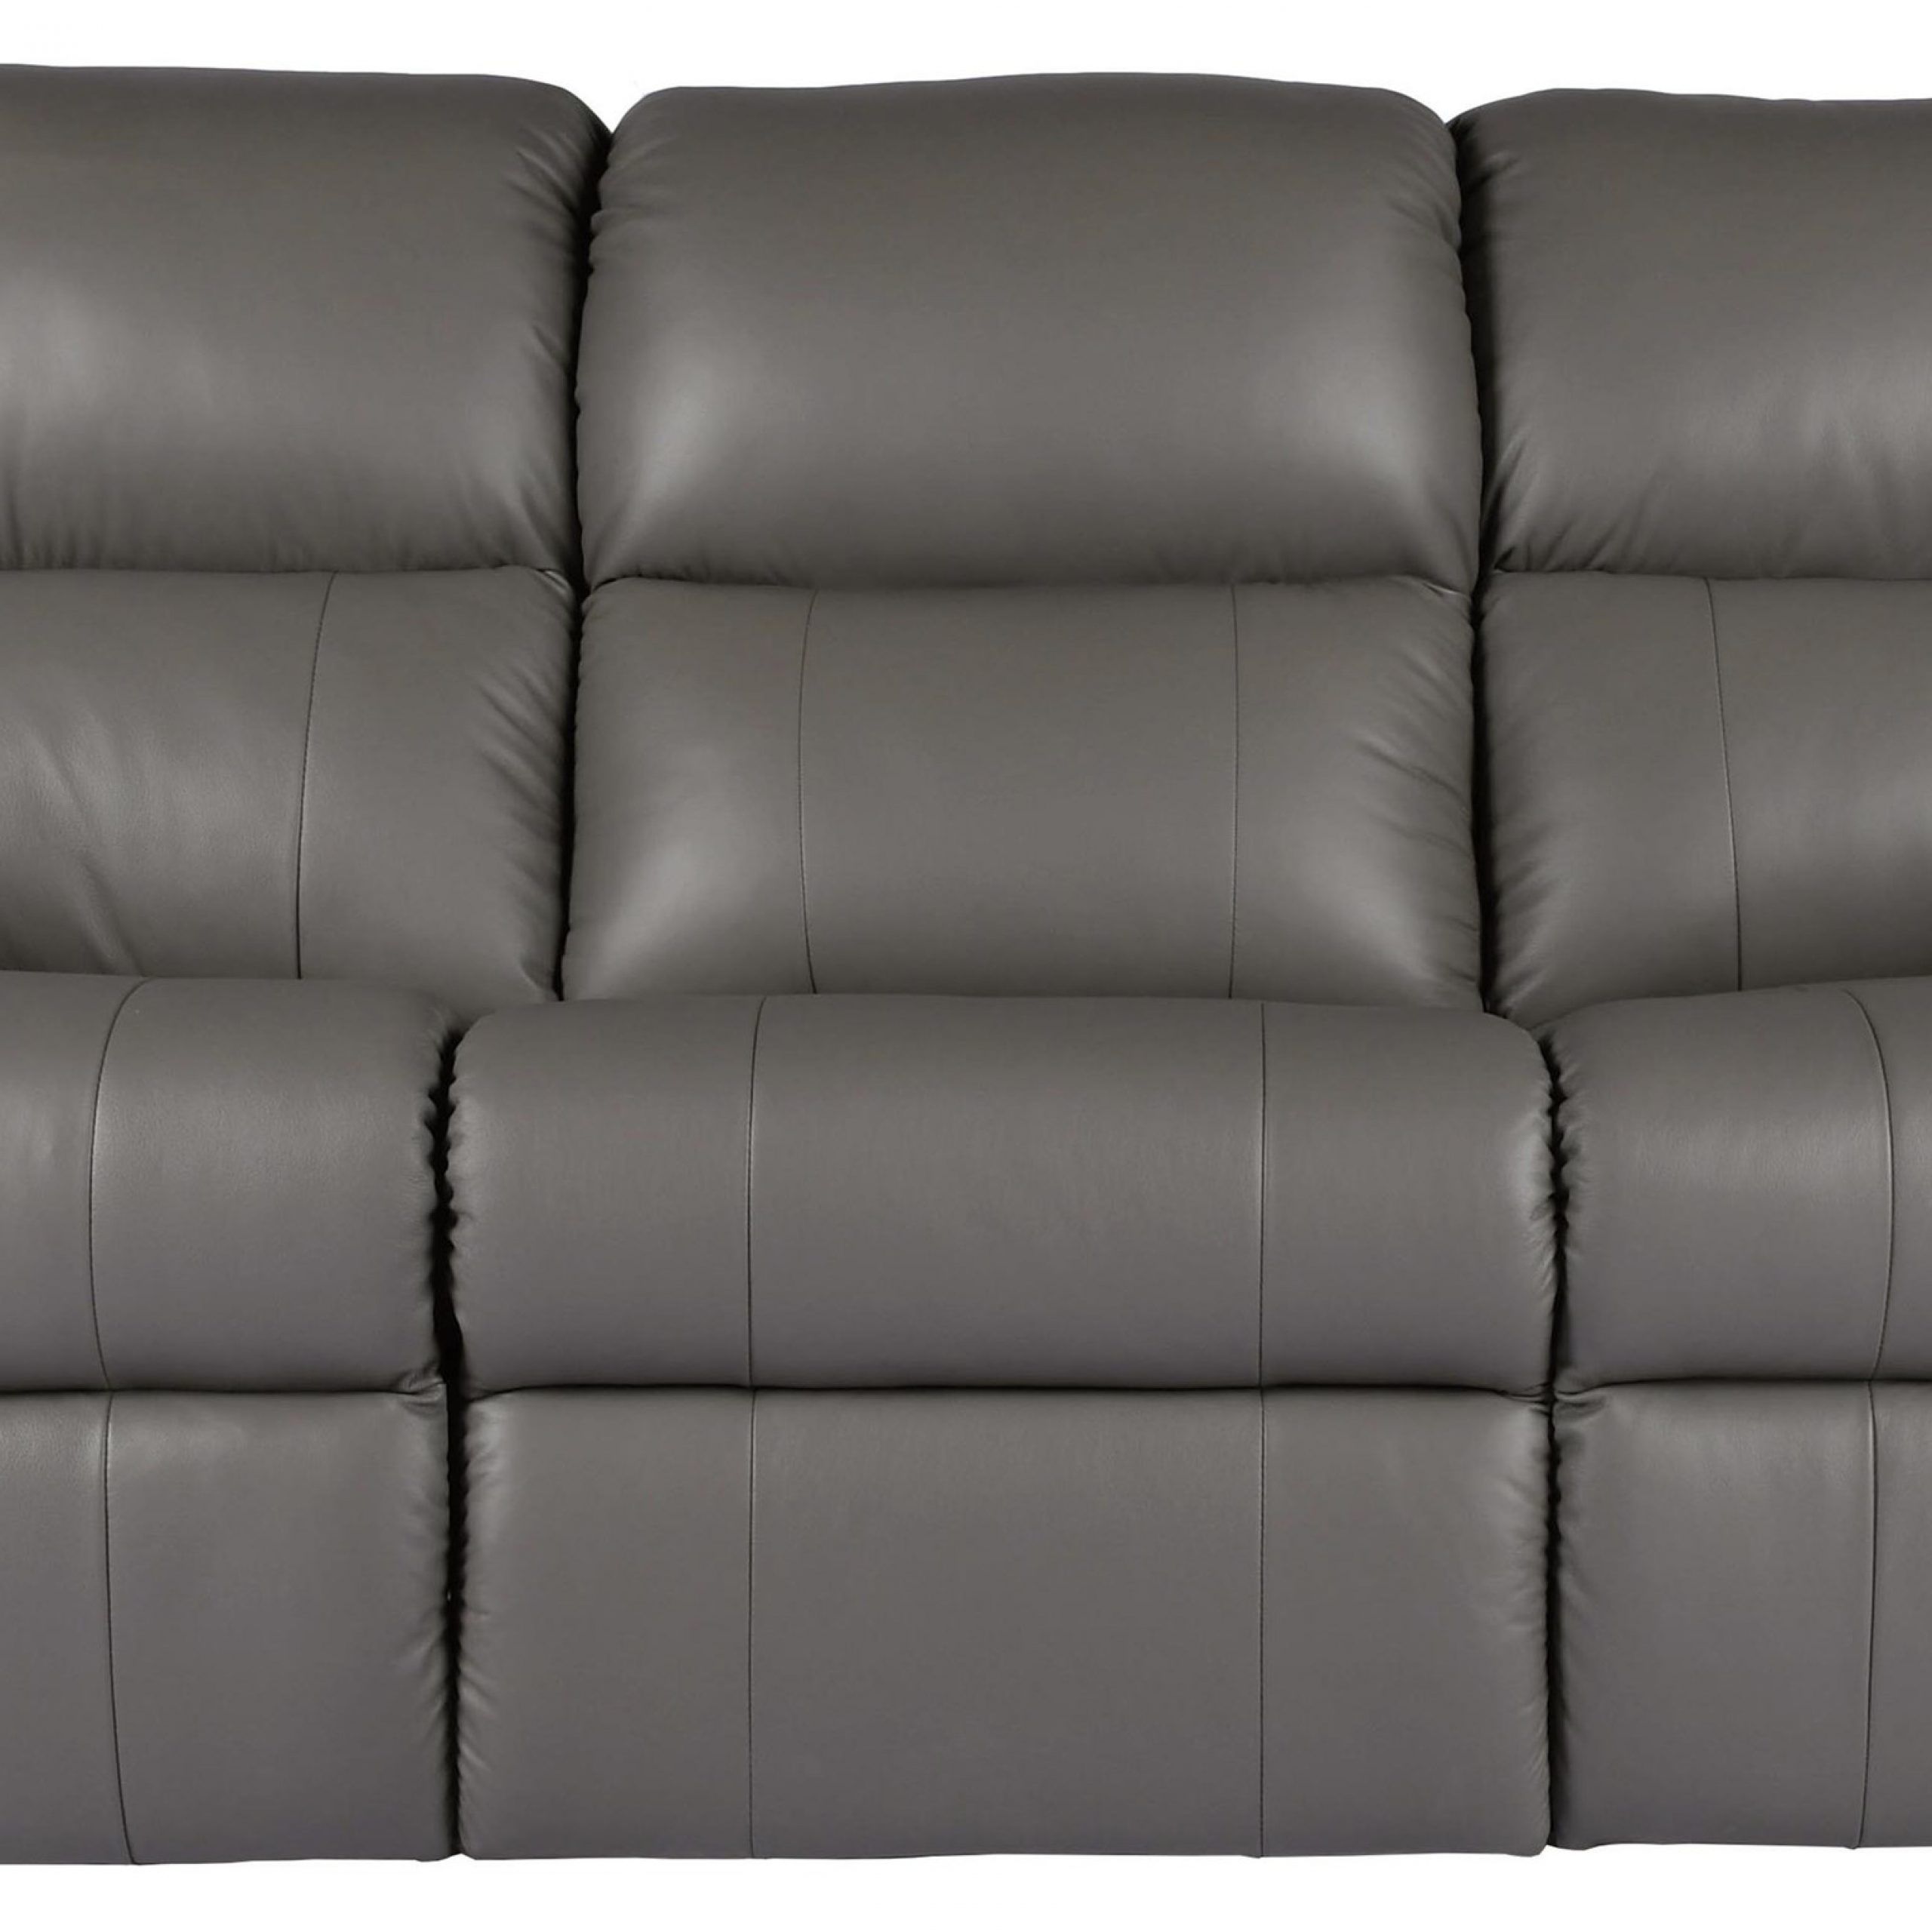 Rockwood Burleigh Power Reclining Sofa With Pillow Arms Inside Bennett Power Reclining Sofas (View 15 of 15)